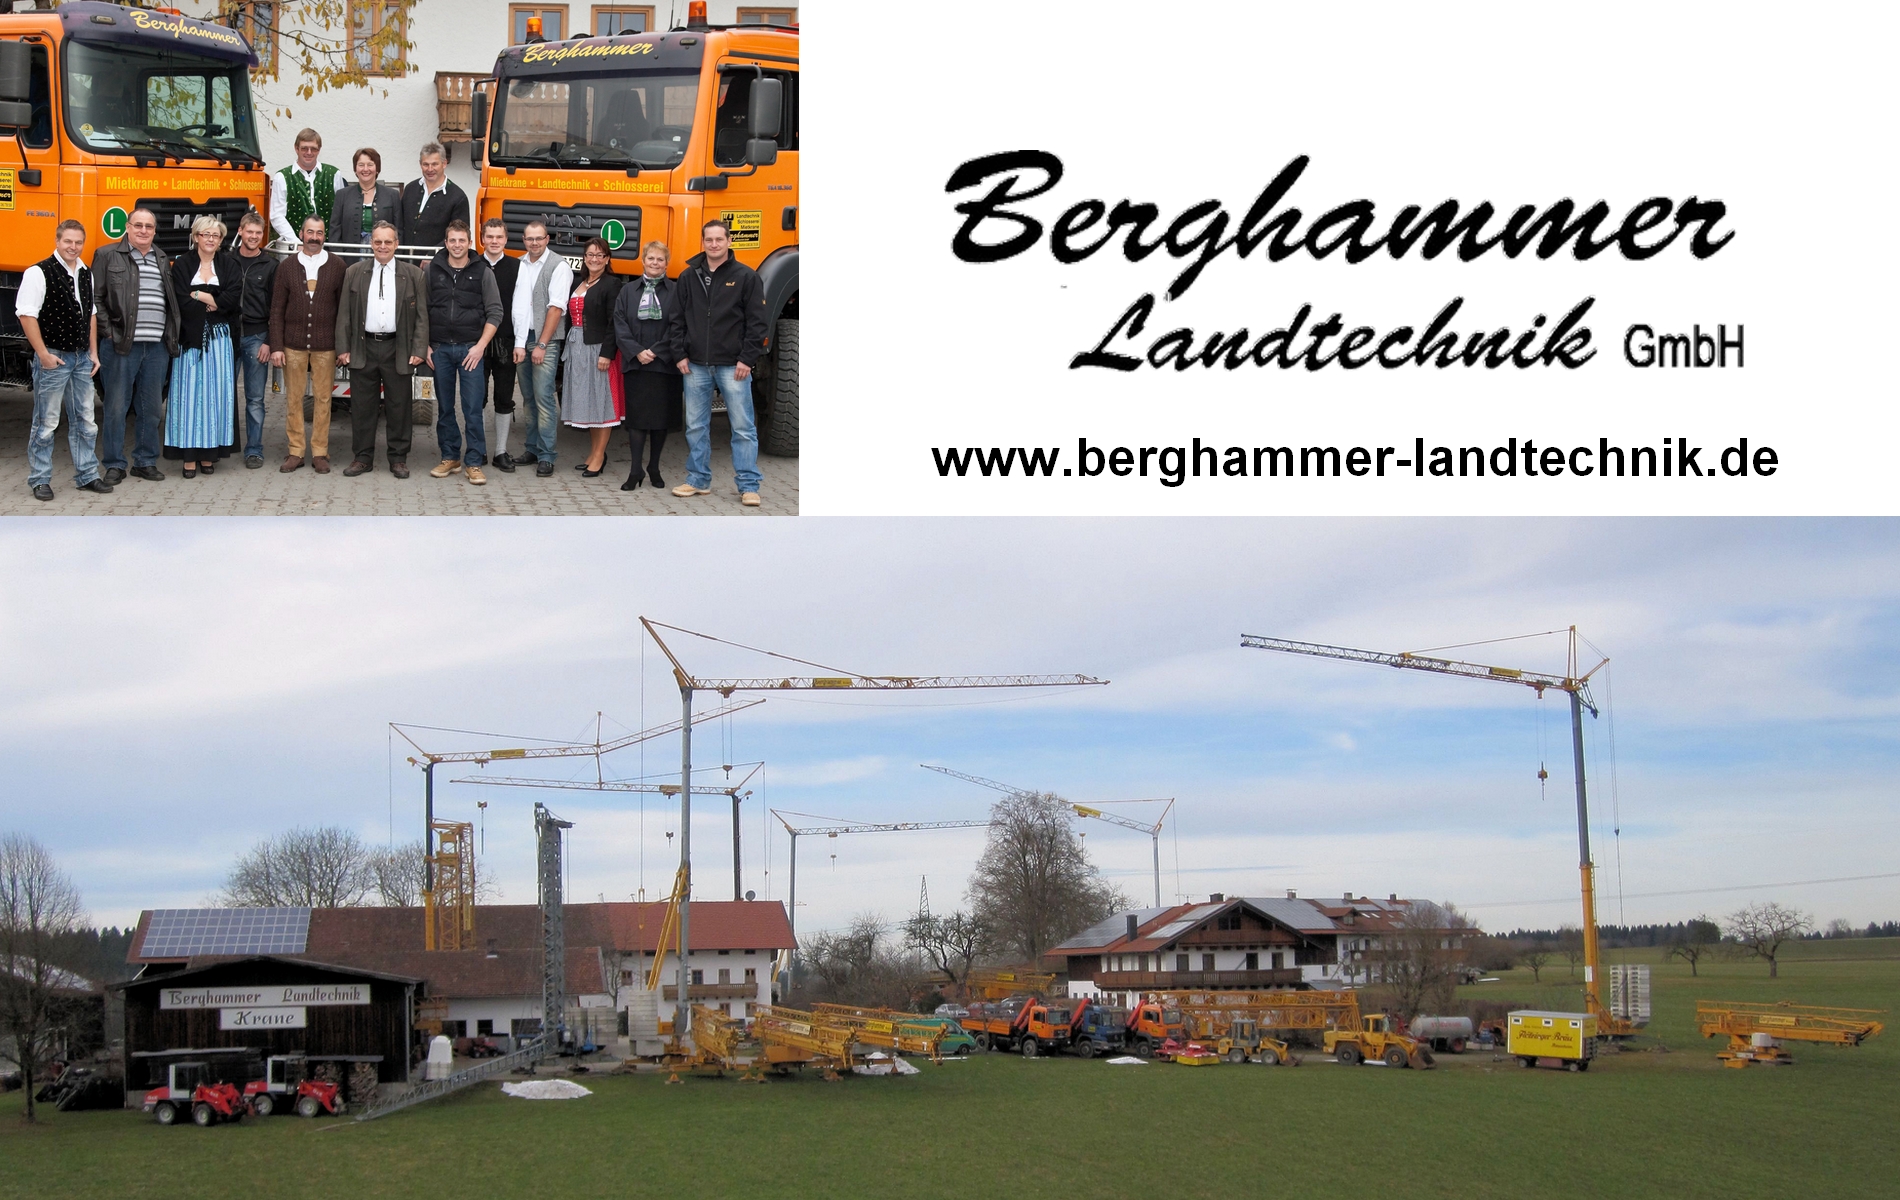 Berghammer Landtechnick GmbH